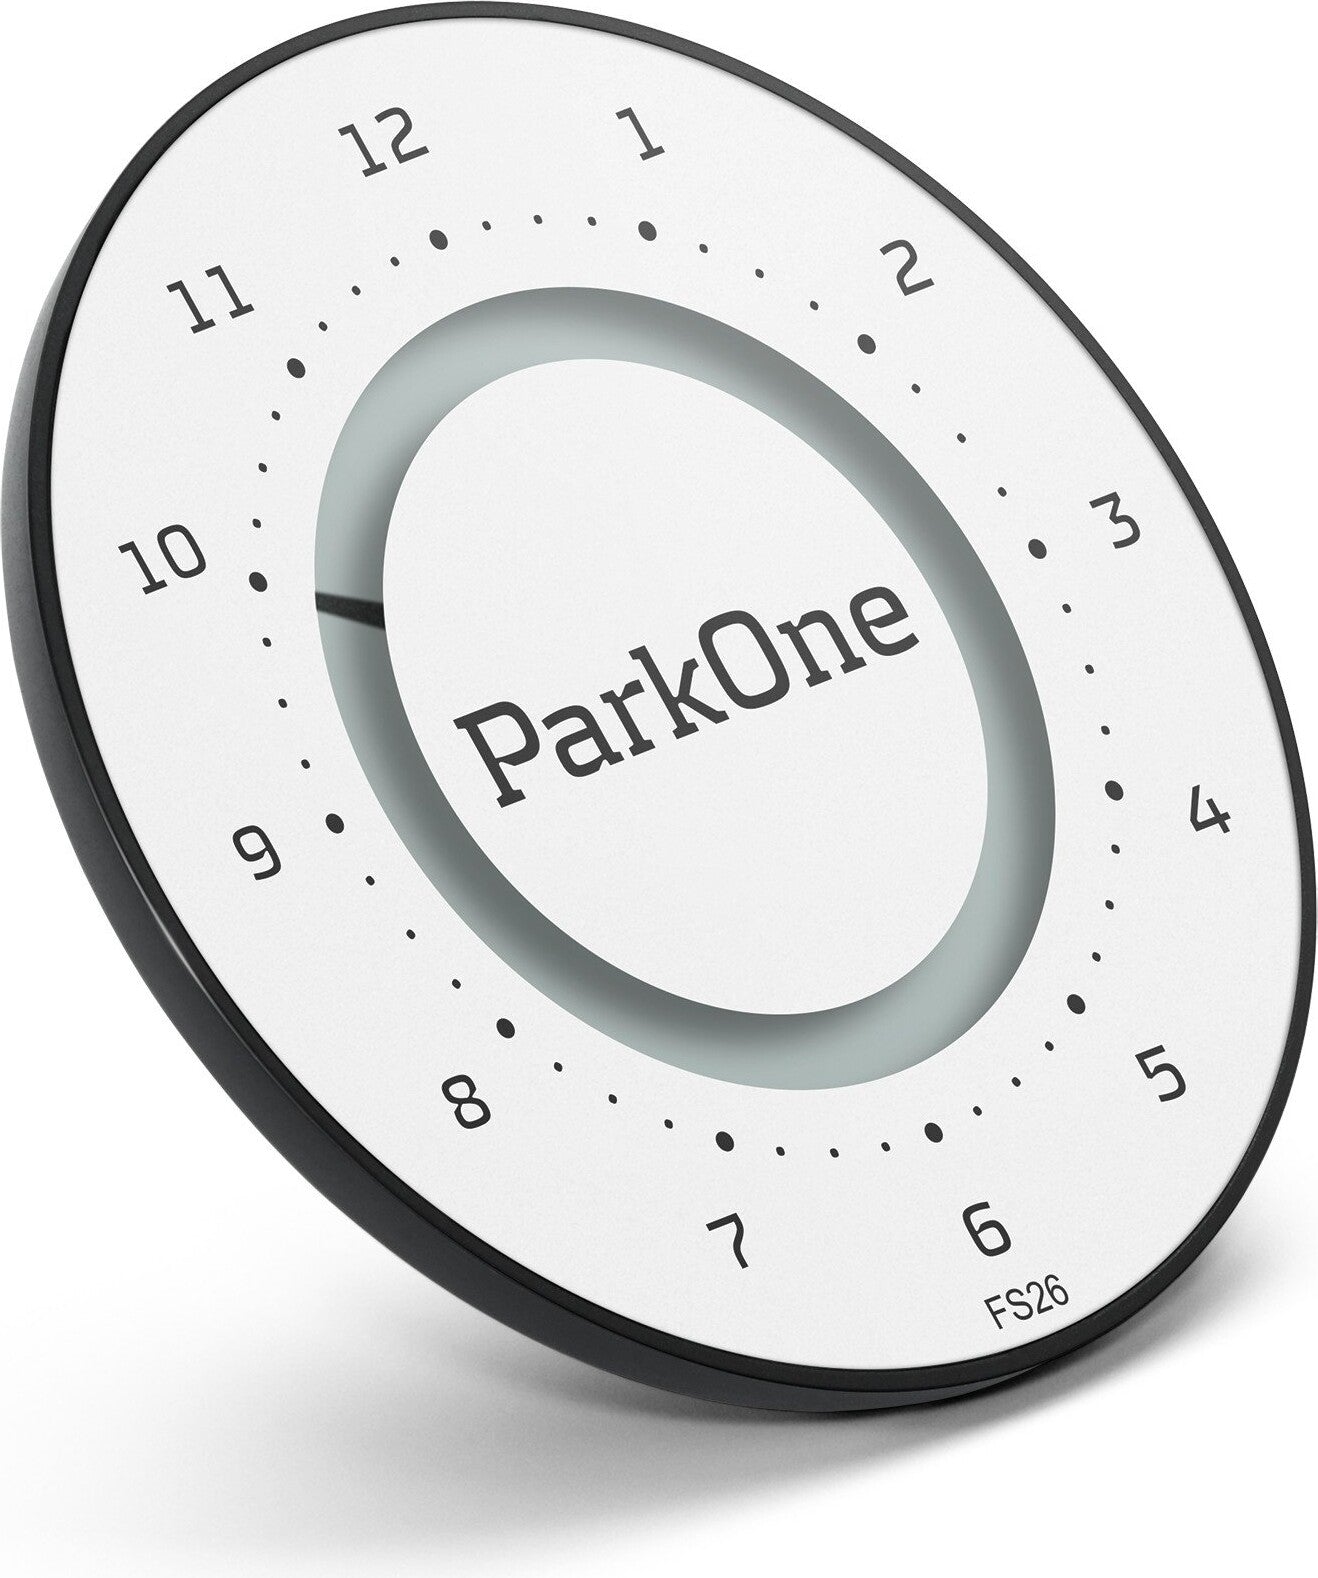 ParkOne 2 - Elektronisk parkeringsmätare - Alpin vit